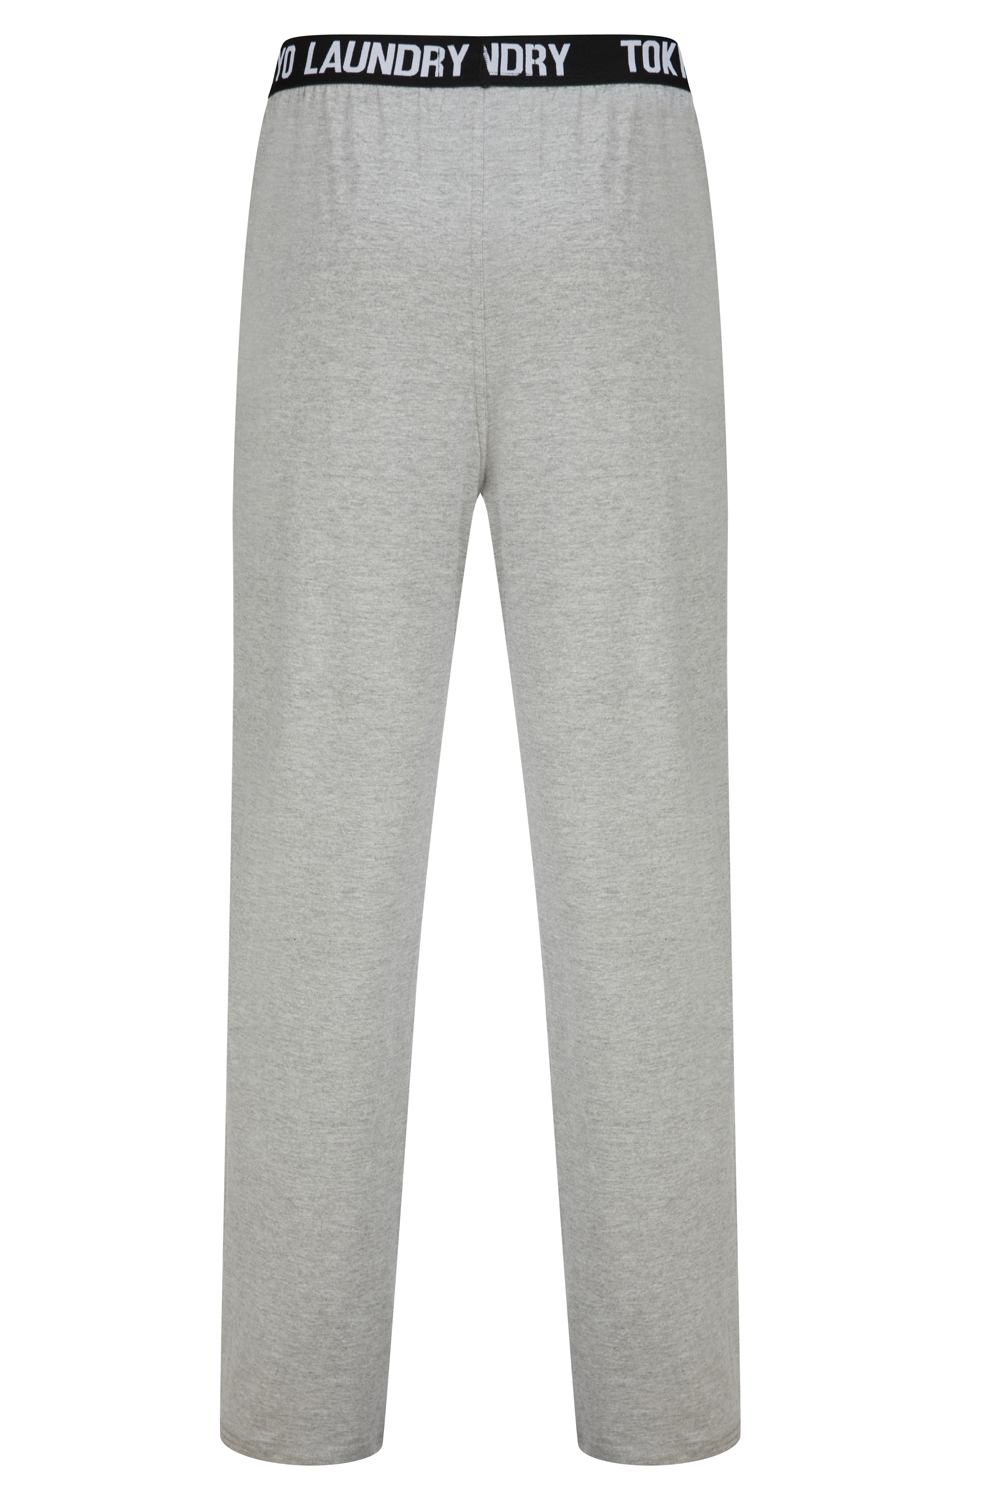 Details about   Tokyo Laundry Mens Soft Cotton Jersey Lounge Pants Pyjama Bottoms Nightwear